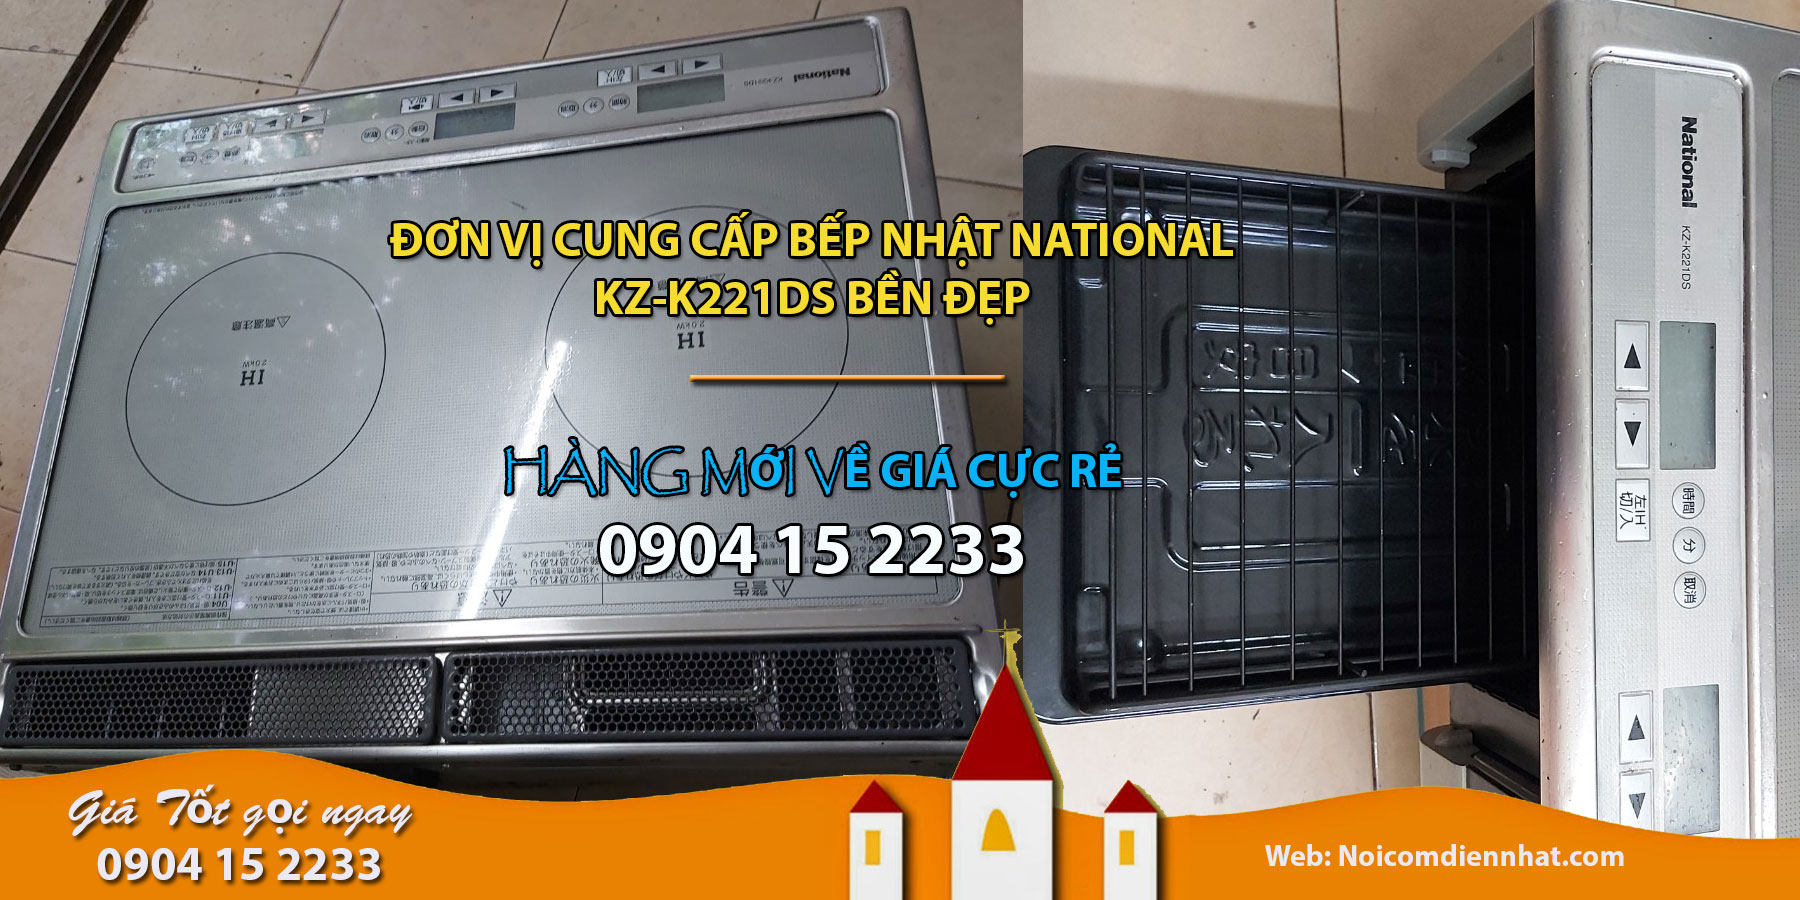 Bep tu Nhat National KZ-K221DS